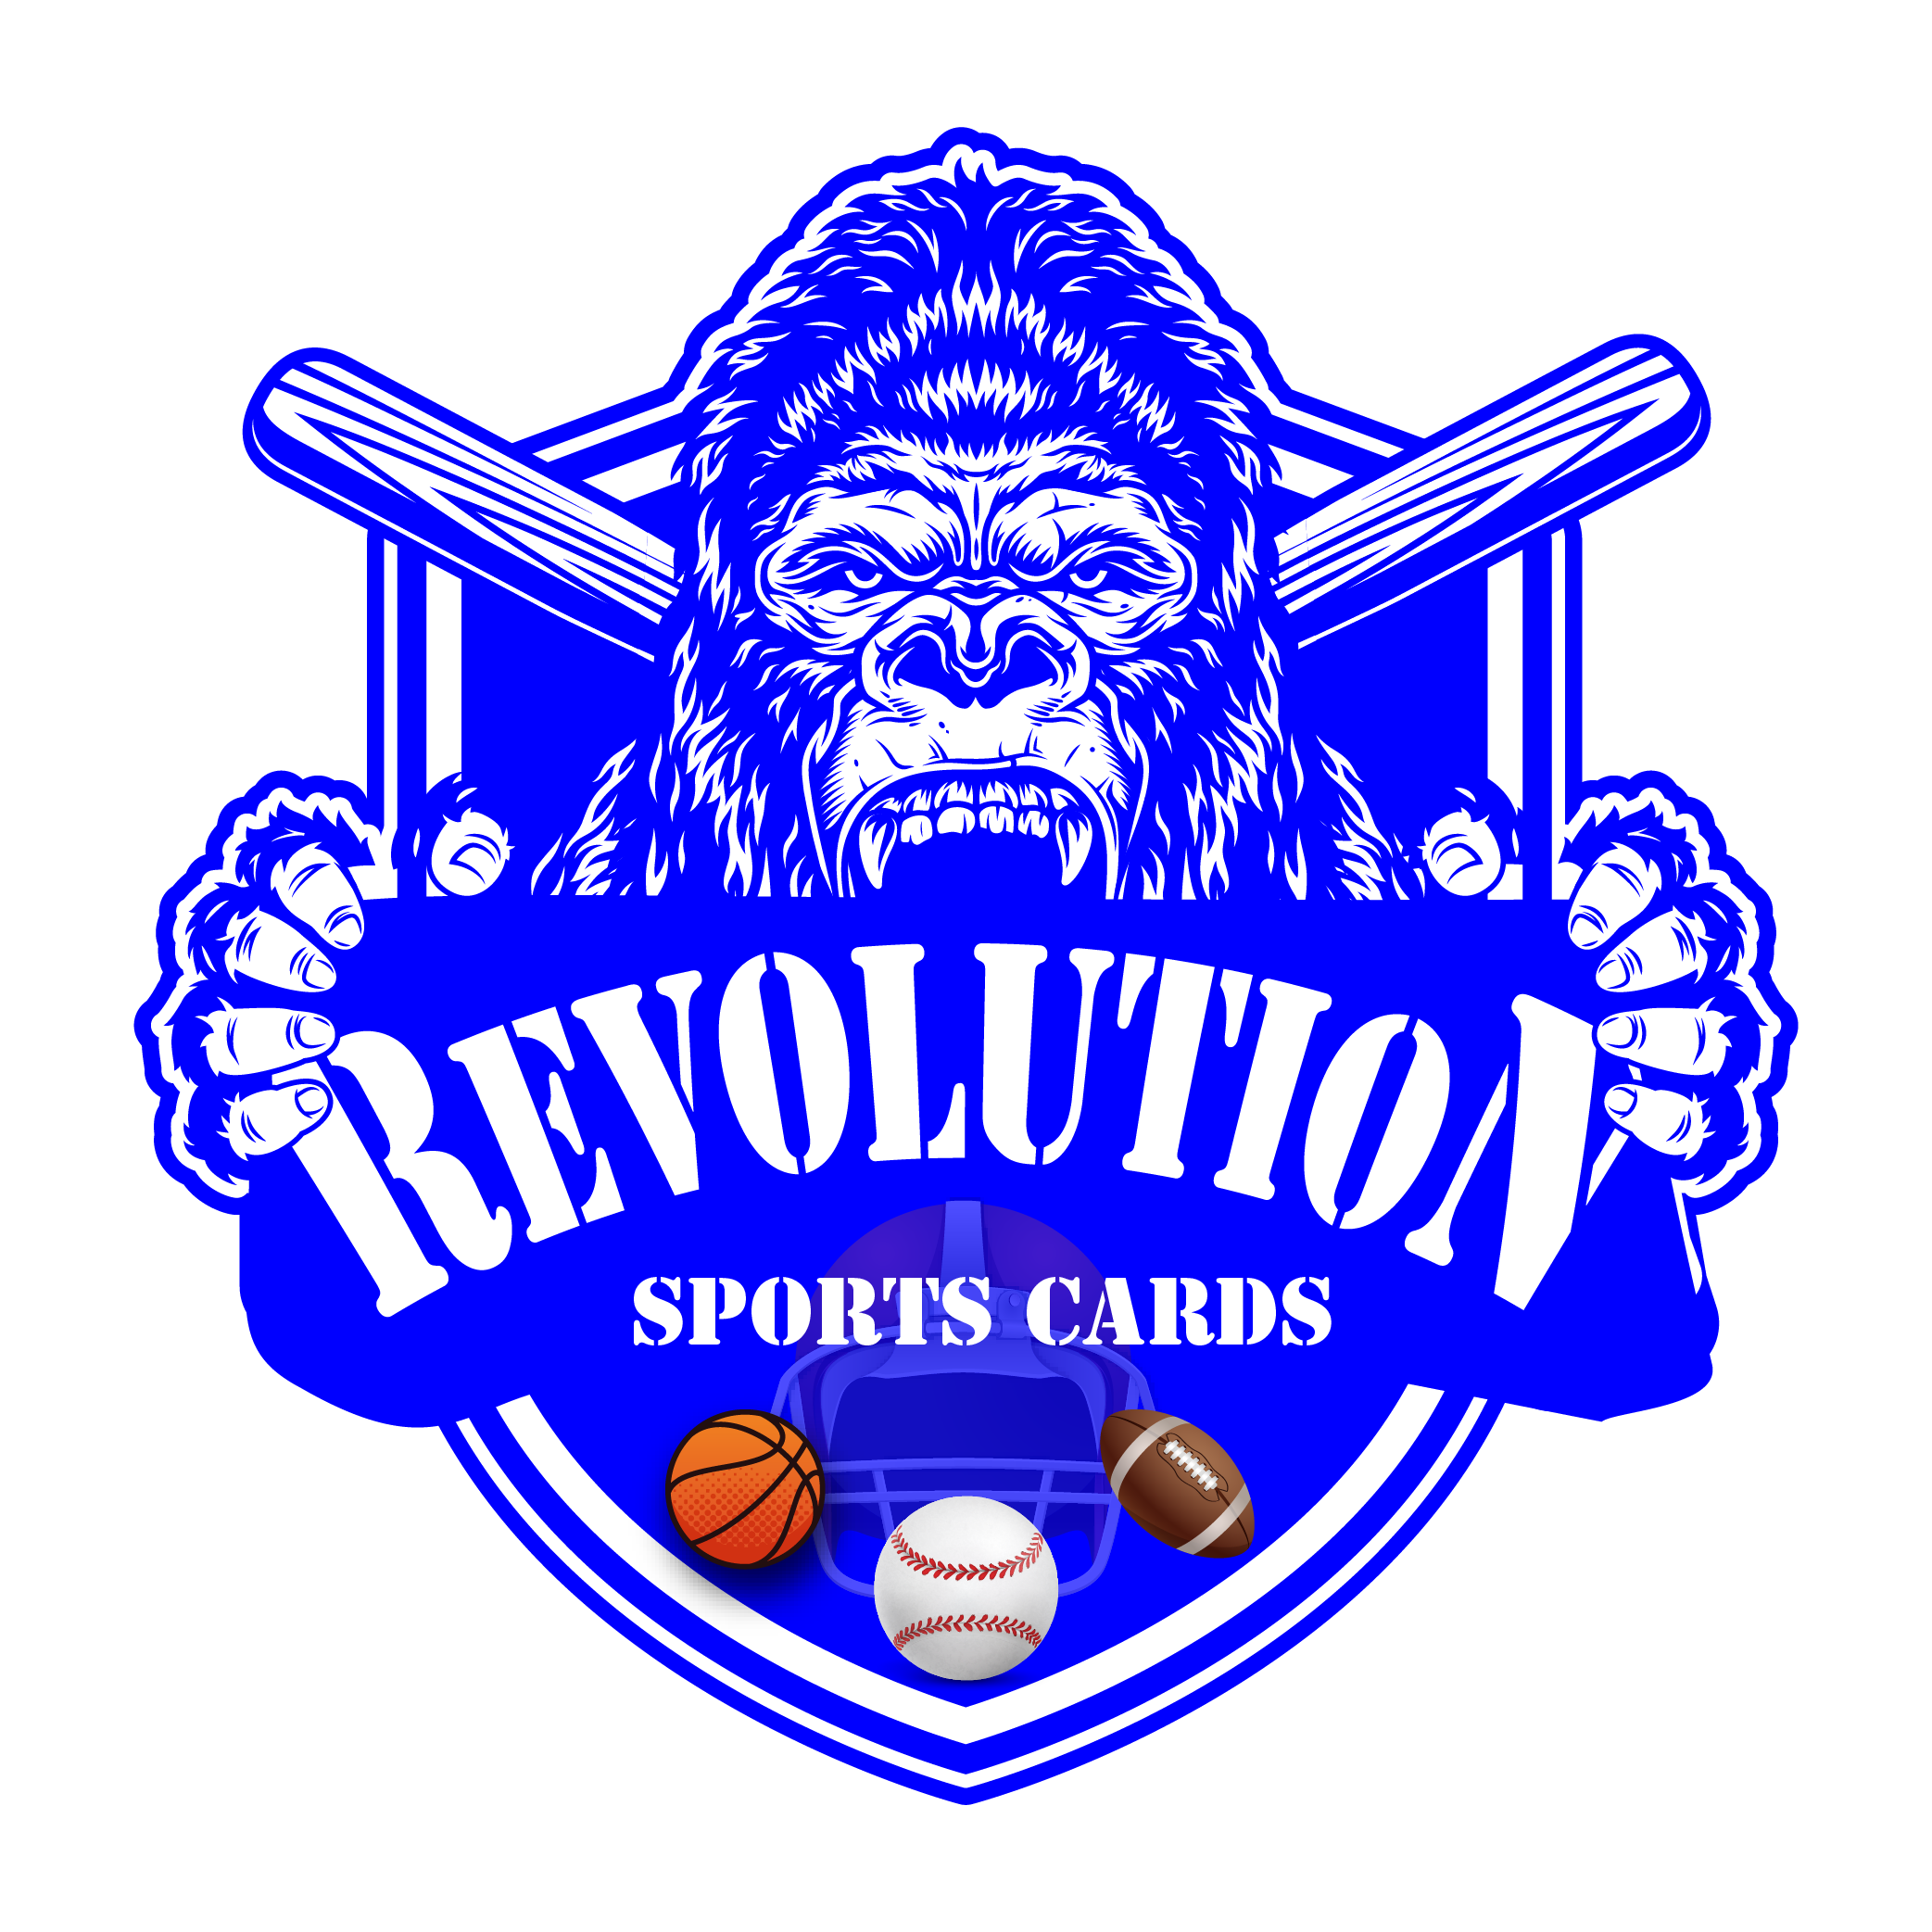 Revolution Sports Card